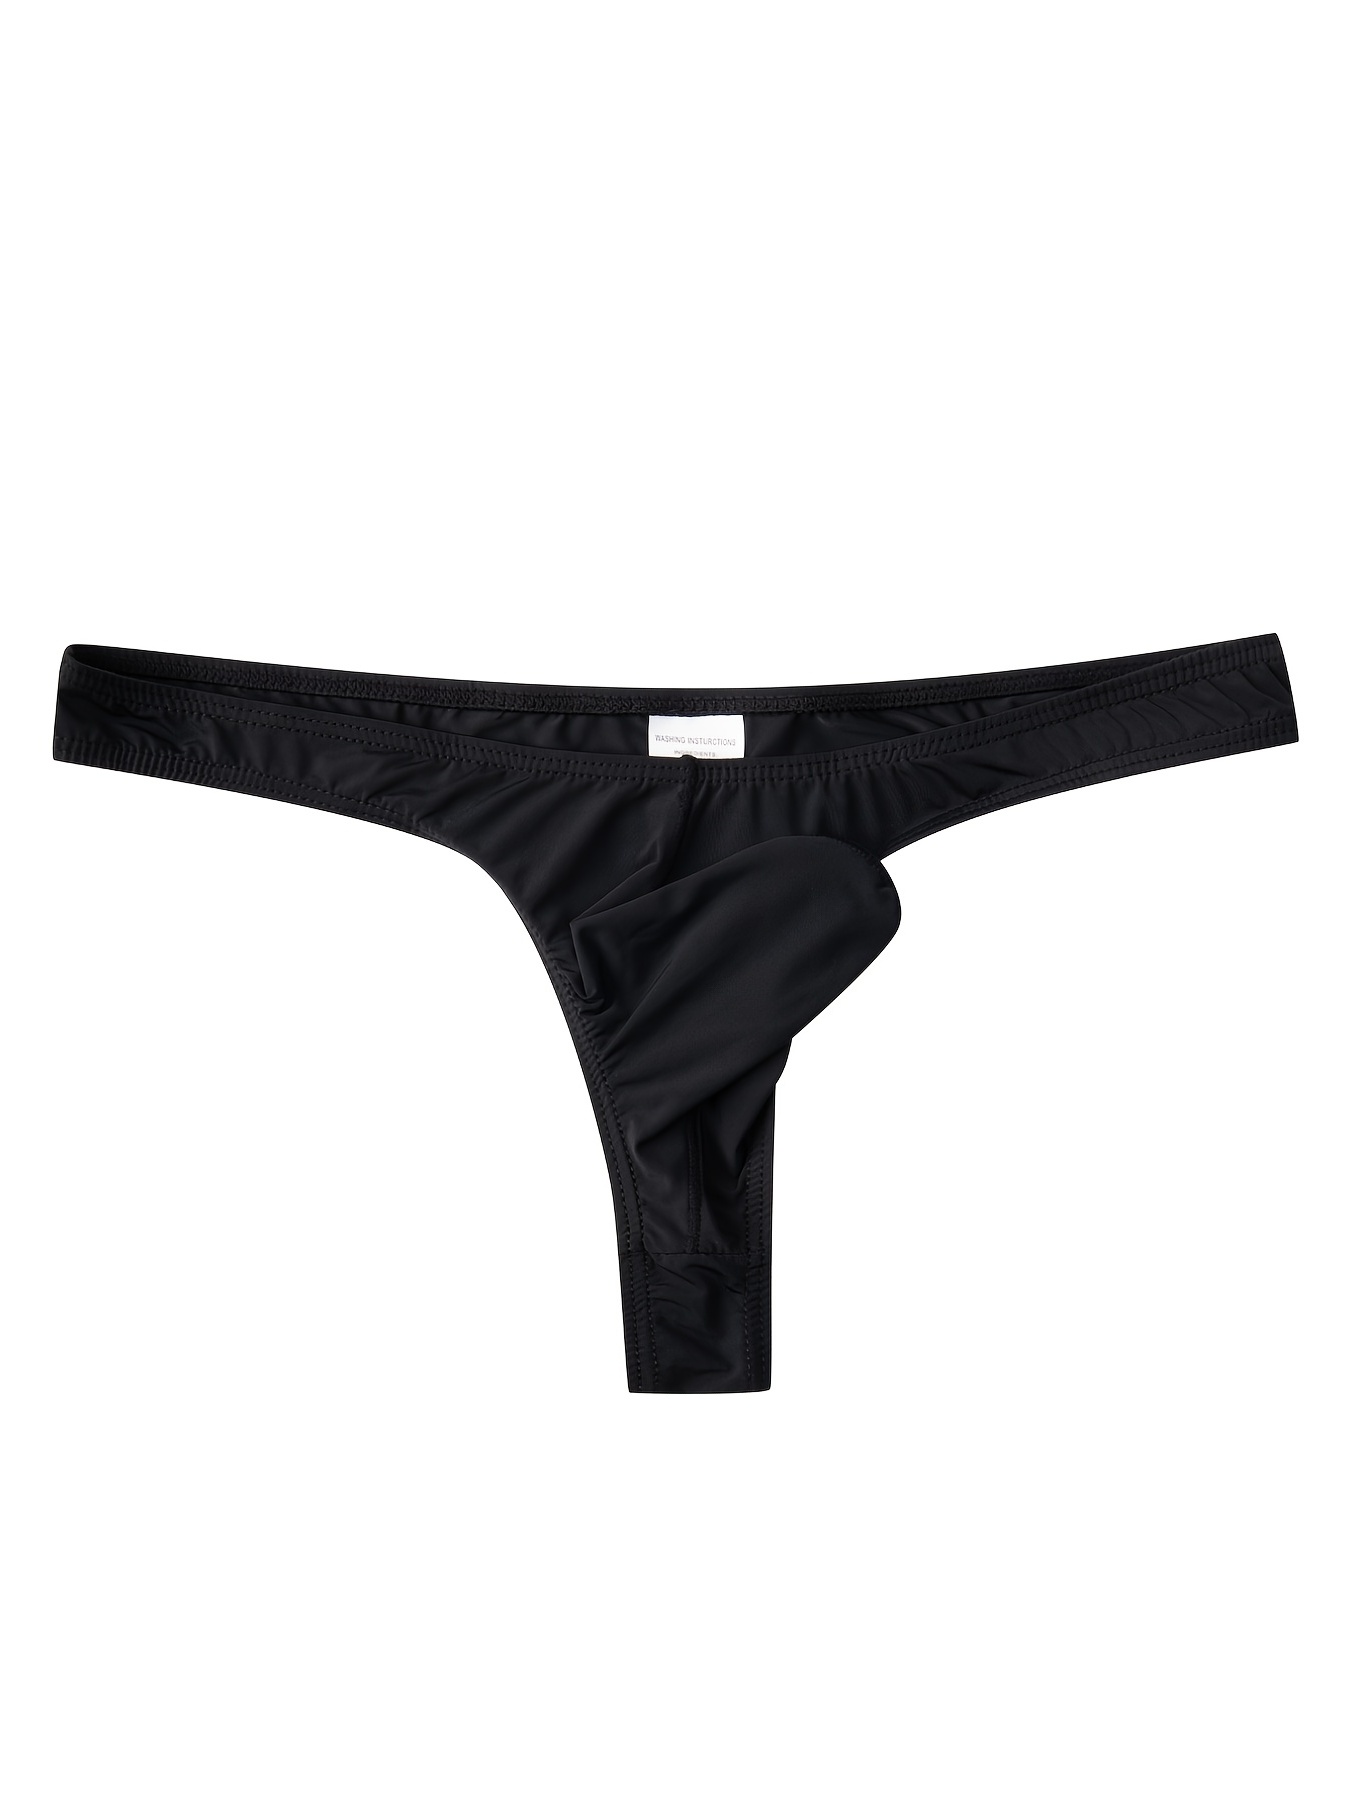 Black - Men Novelty Elephant Trunk Thong G-String Pants Underwear Sexy Stag  UK